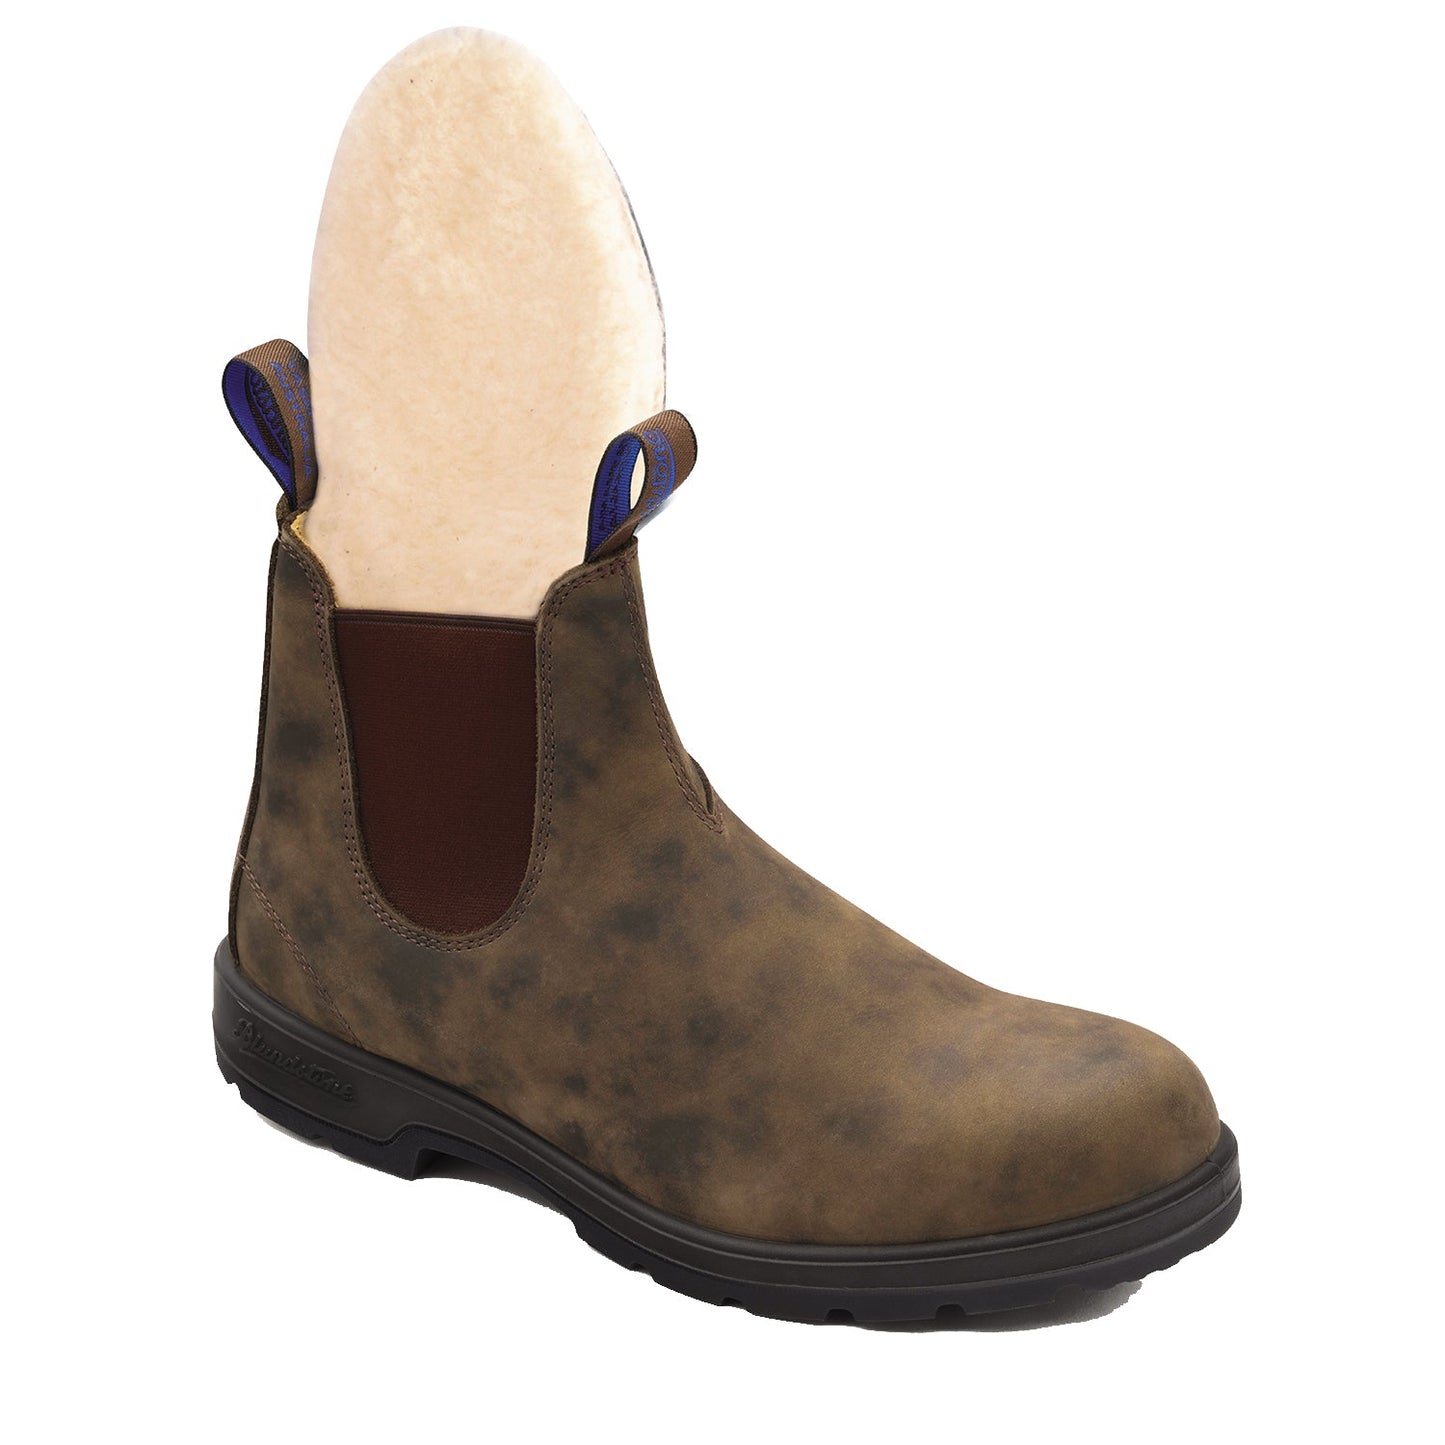 Blundstone 584 Winter Thermal Rustic Classic Brown - Grady’s Feet Essentials - Blundstone